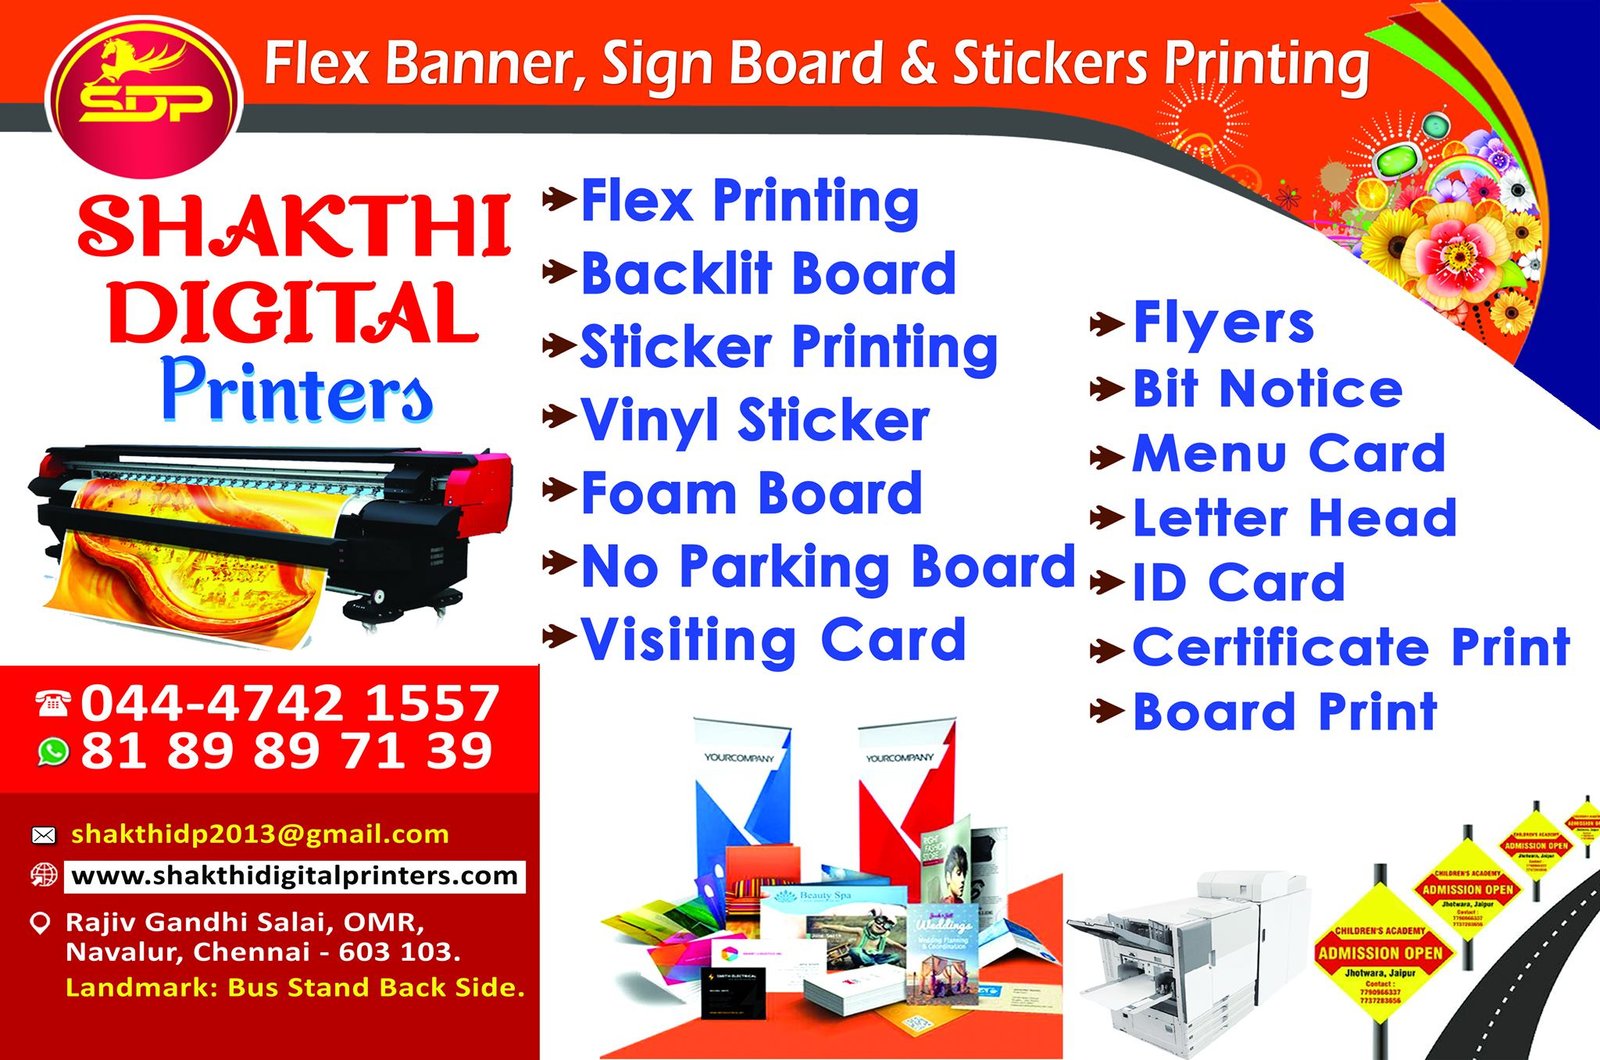 Shakthi Digital Printers